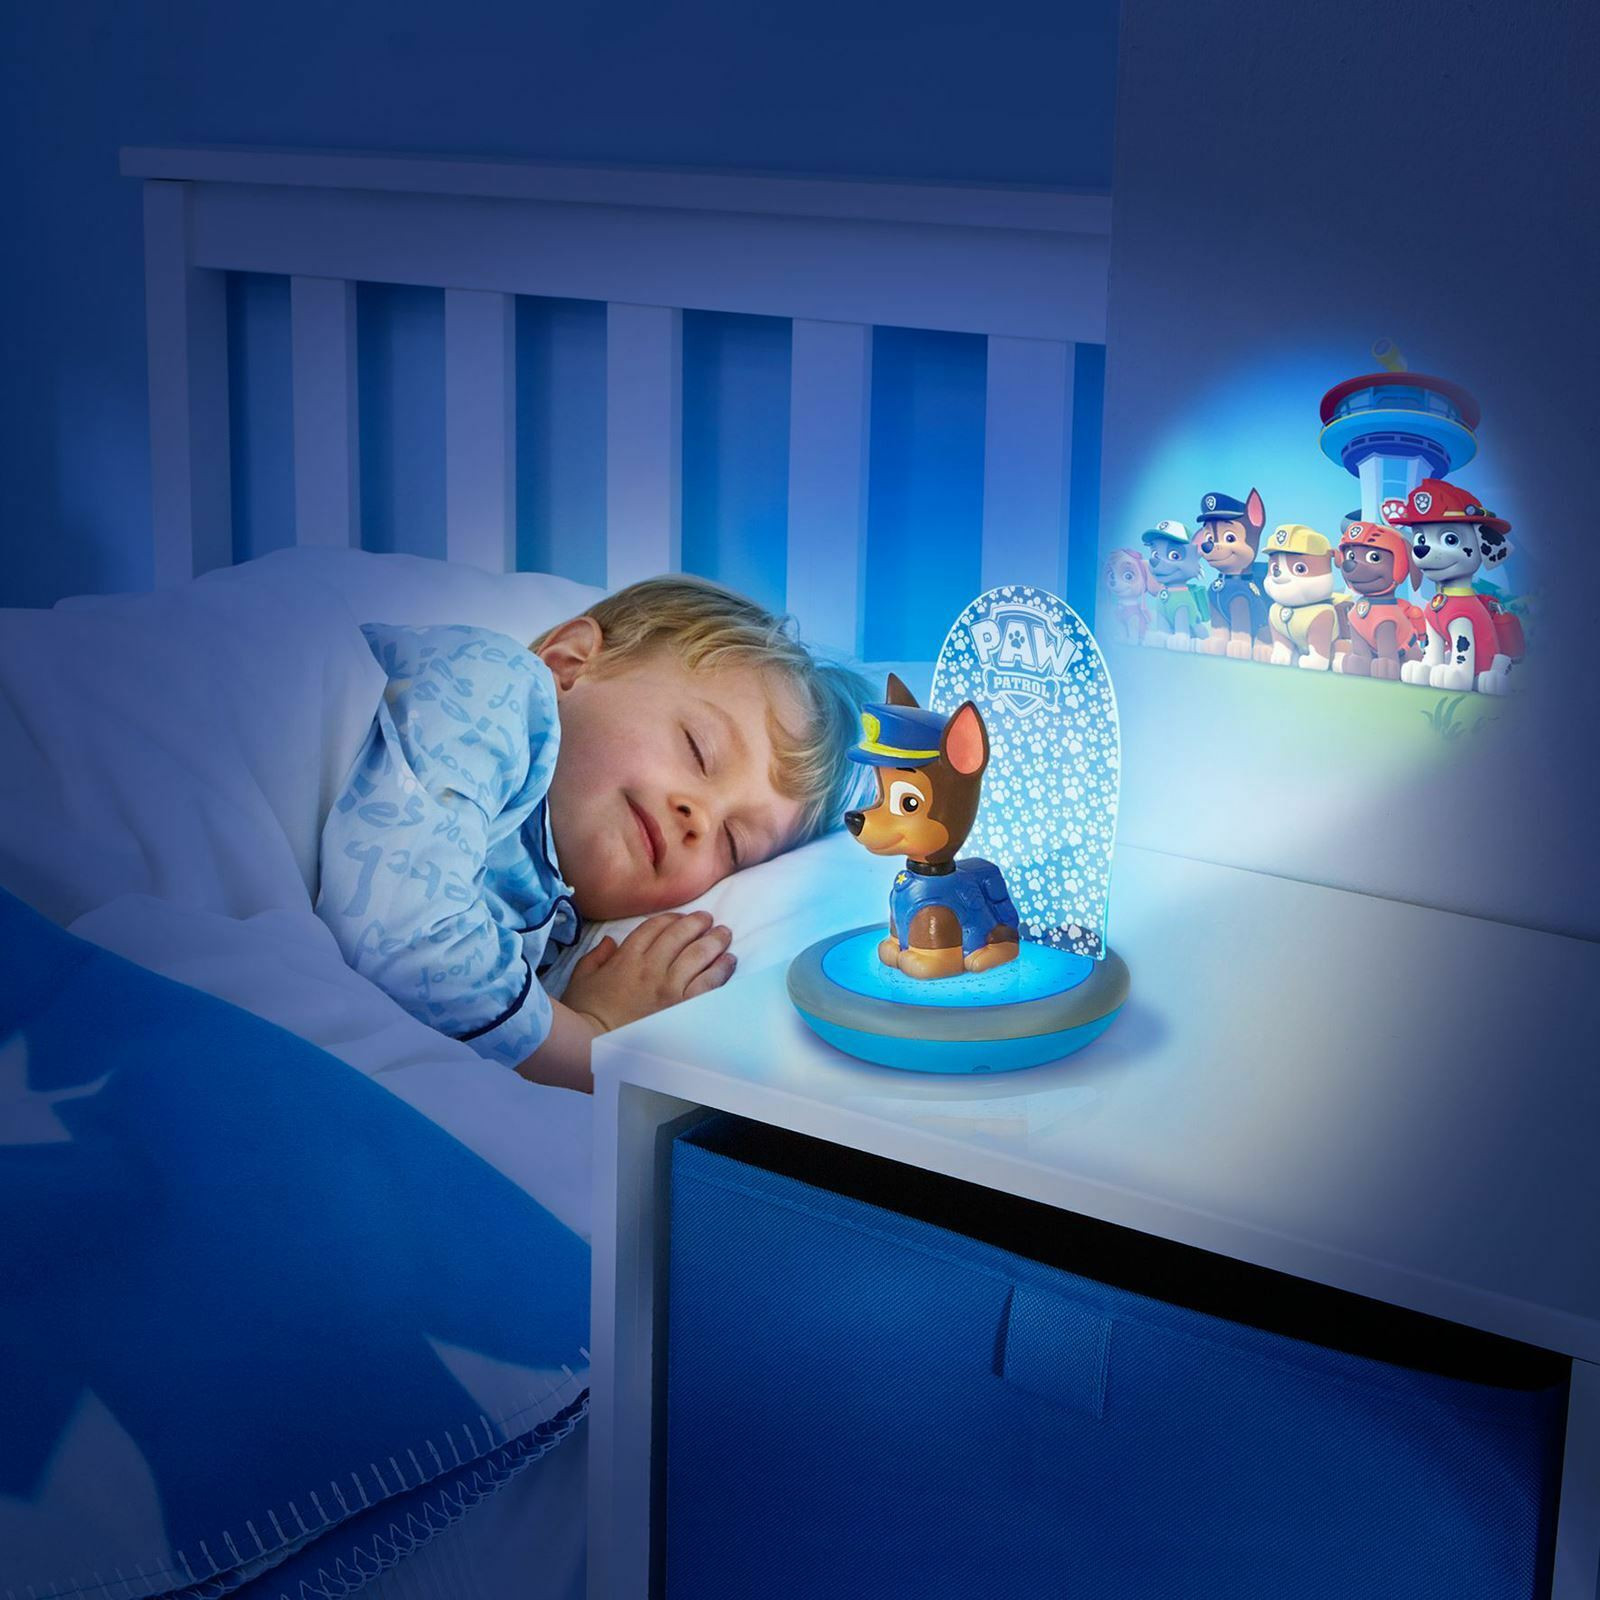 Kids Room Night Light
 PAW PATROL CHASE 3 IN 1 MAGIC GO GLOW NIGHT LIGHT KIDS